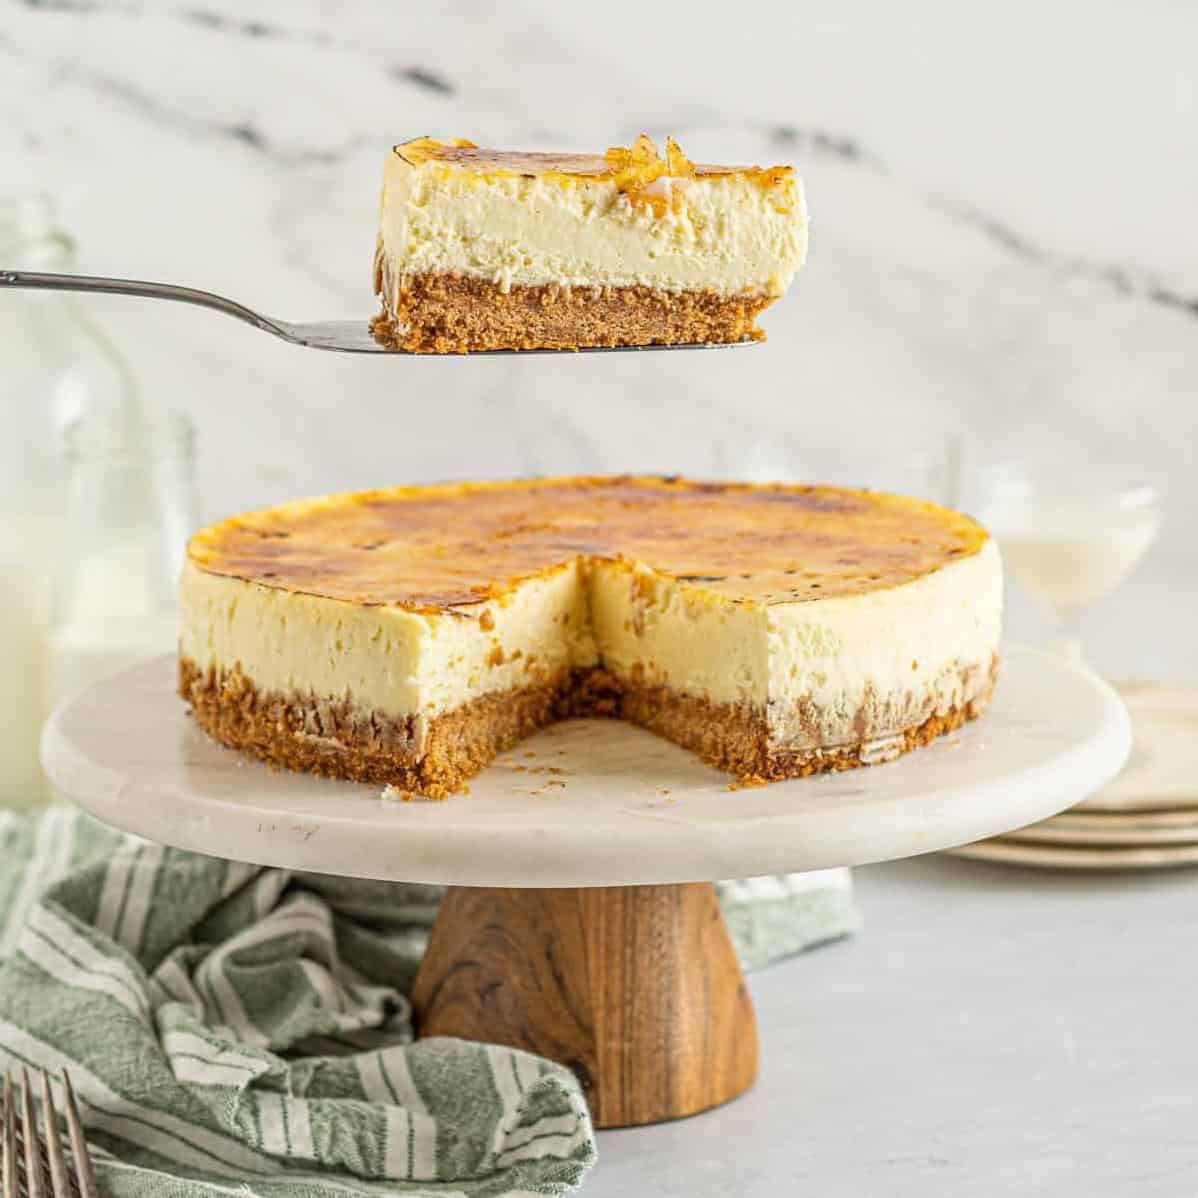  Cheesecake + Creme Brulee = a match made in dessert heaven.